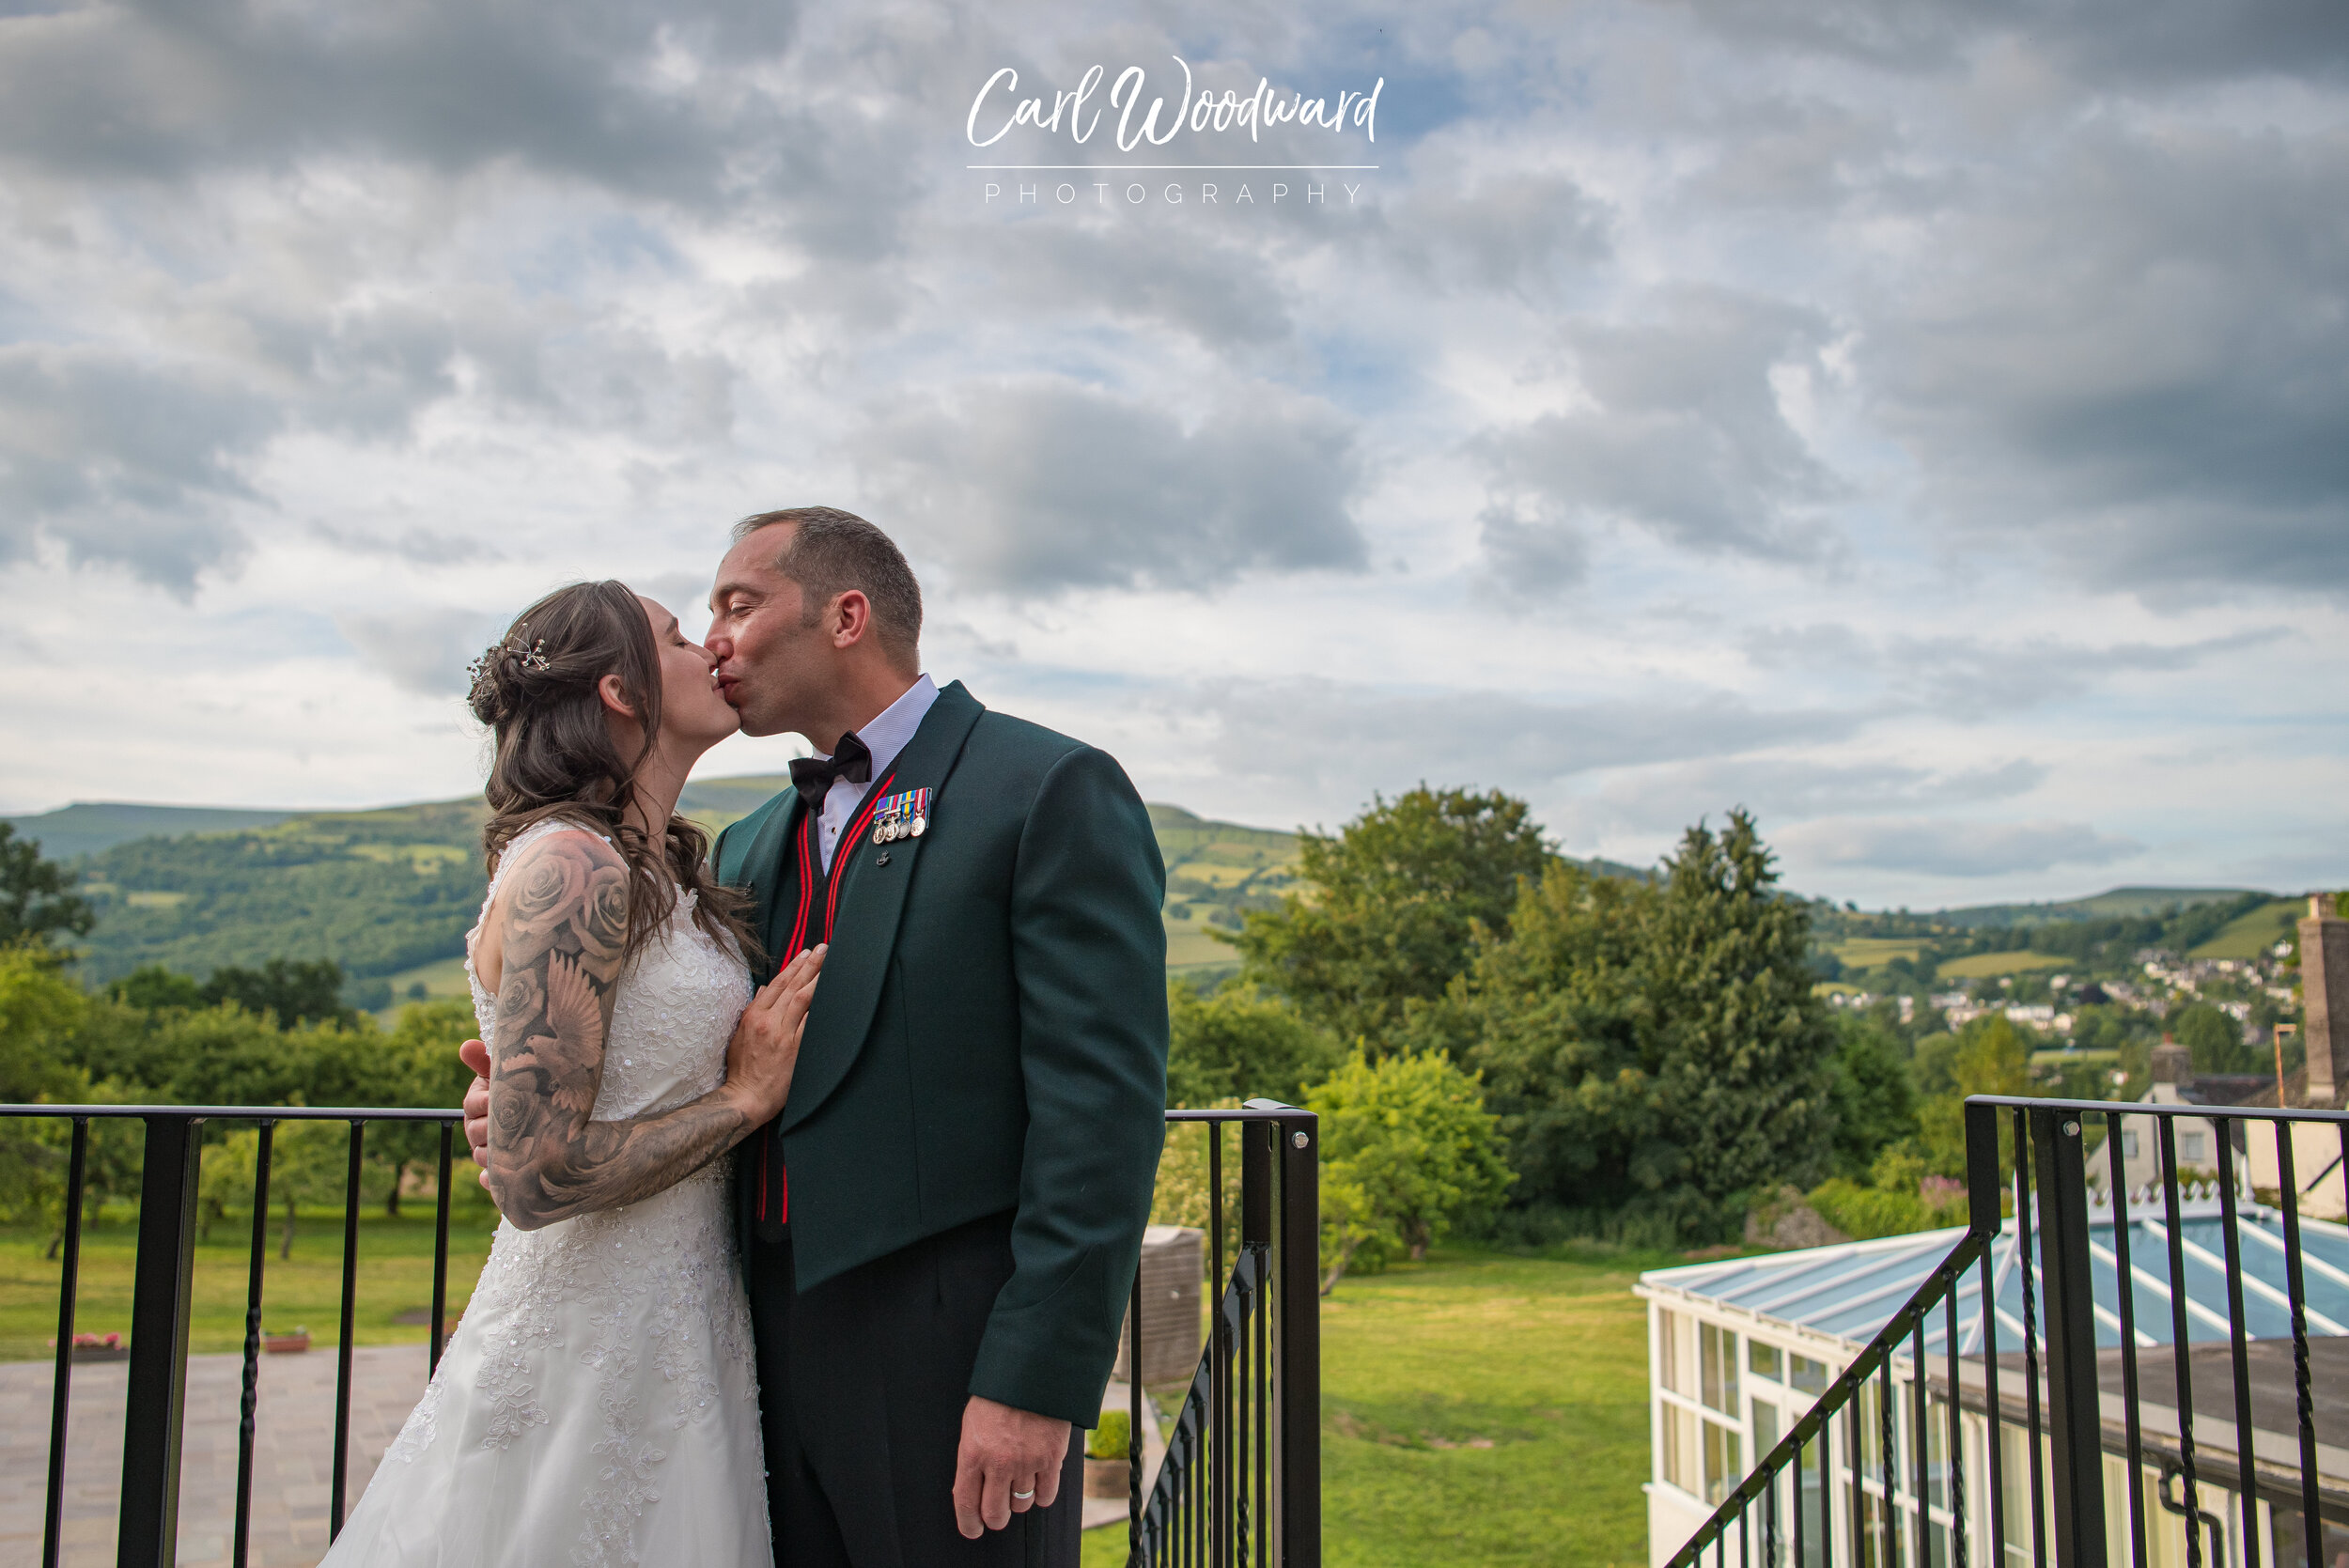 017-Military-Wedding-Photographer-South-Wales-Wedding-Photography.jpg